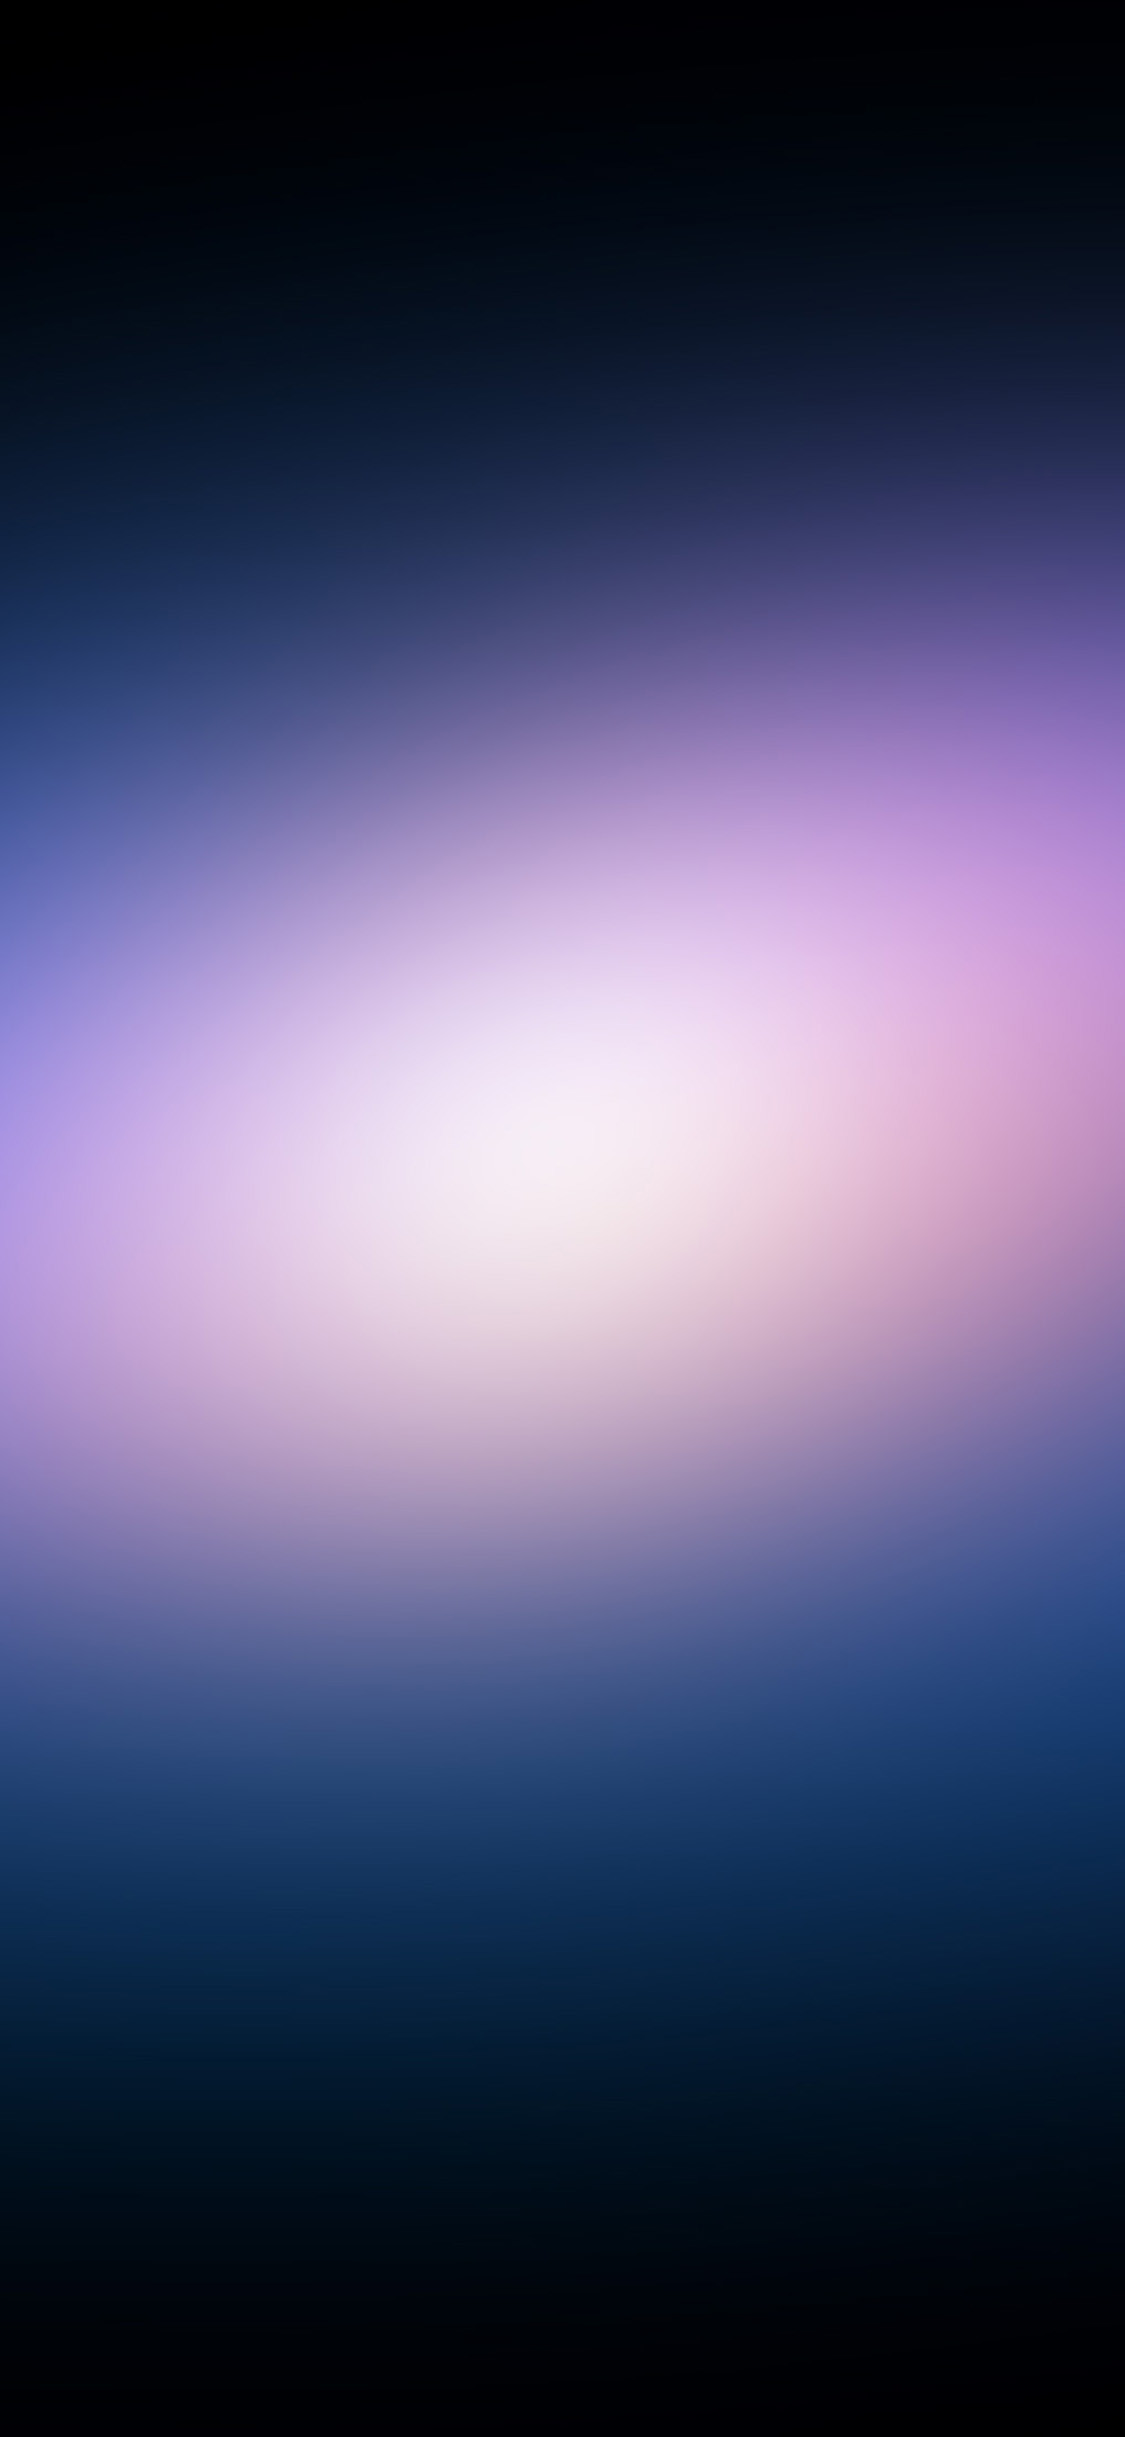 1125x2437 classic-mac-space-background-apple-blur iPhone X Wallpaper